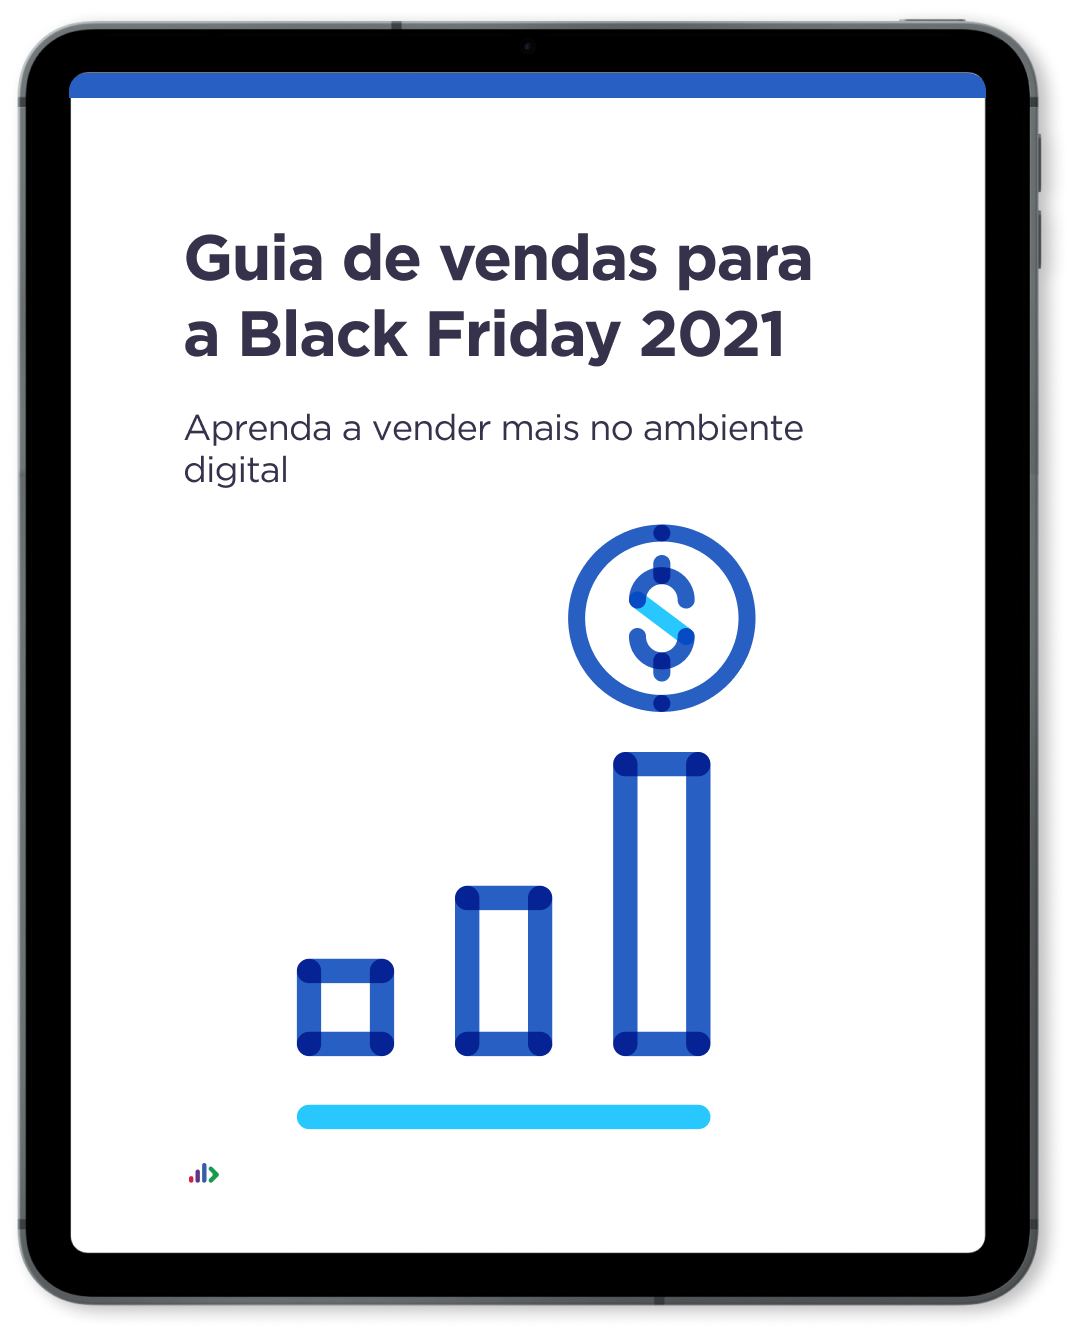 si-lp-ebook-guia-de-vendas-black-friday-2021-1